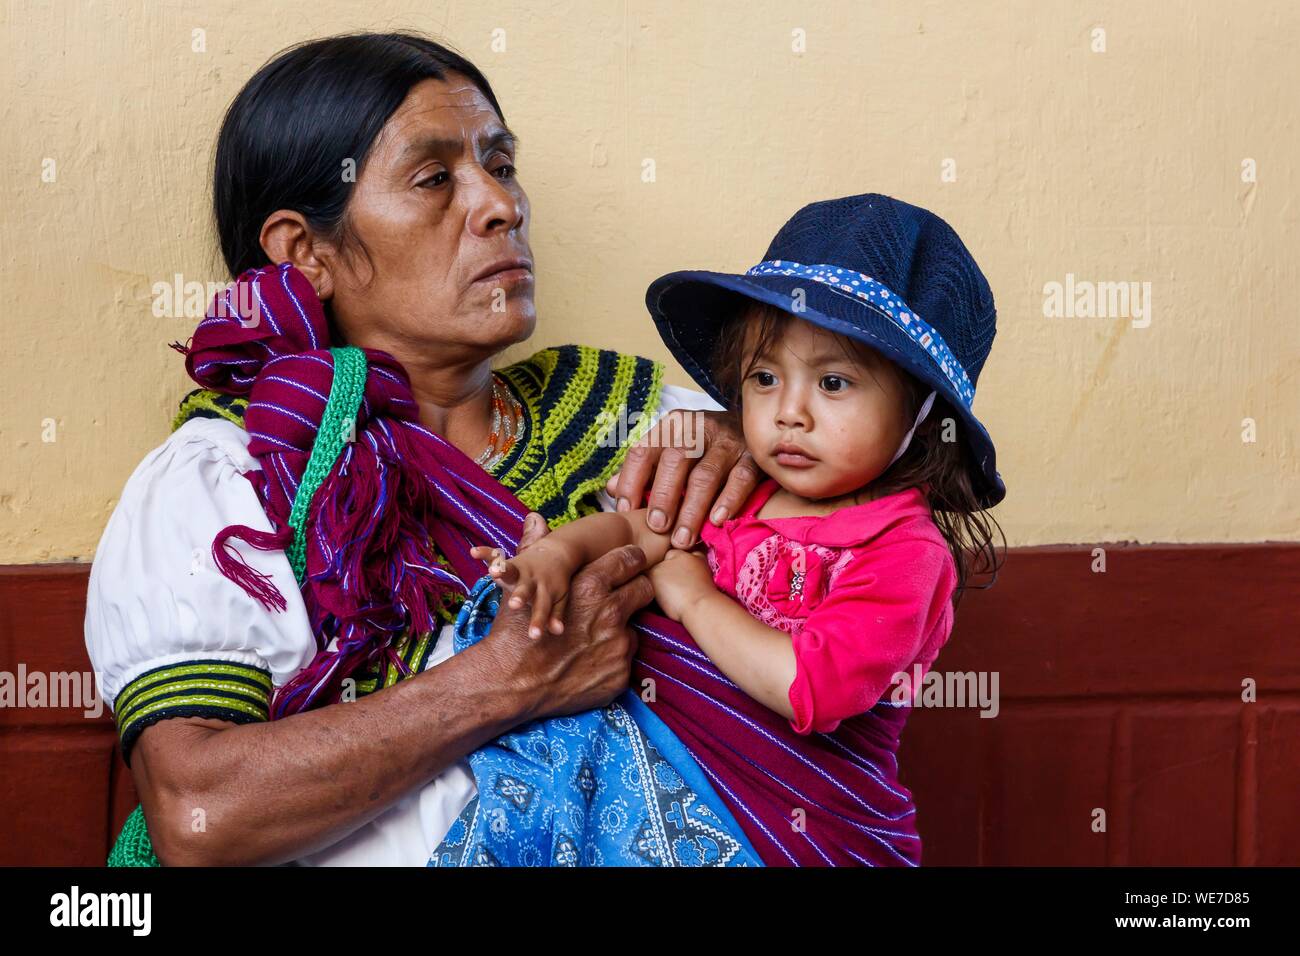 Mexico, Chiapas state, Comitan de Dominguez, amerindian woman with her daughter Stock Photo